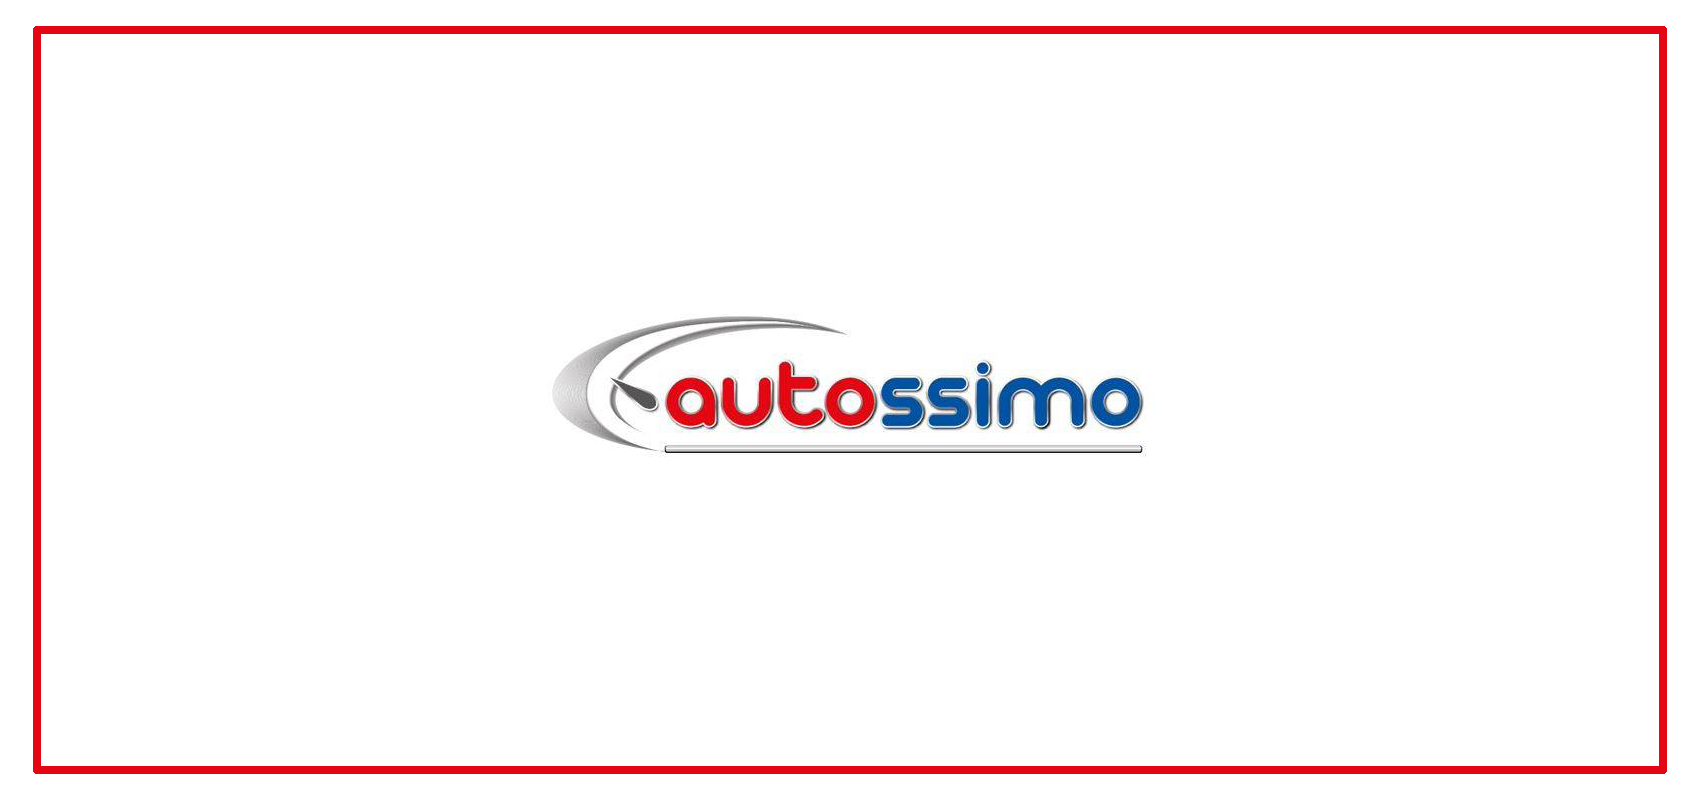 FAQ: How to contact Autossimo Public/Pro?